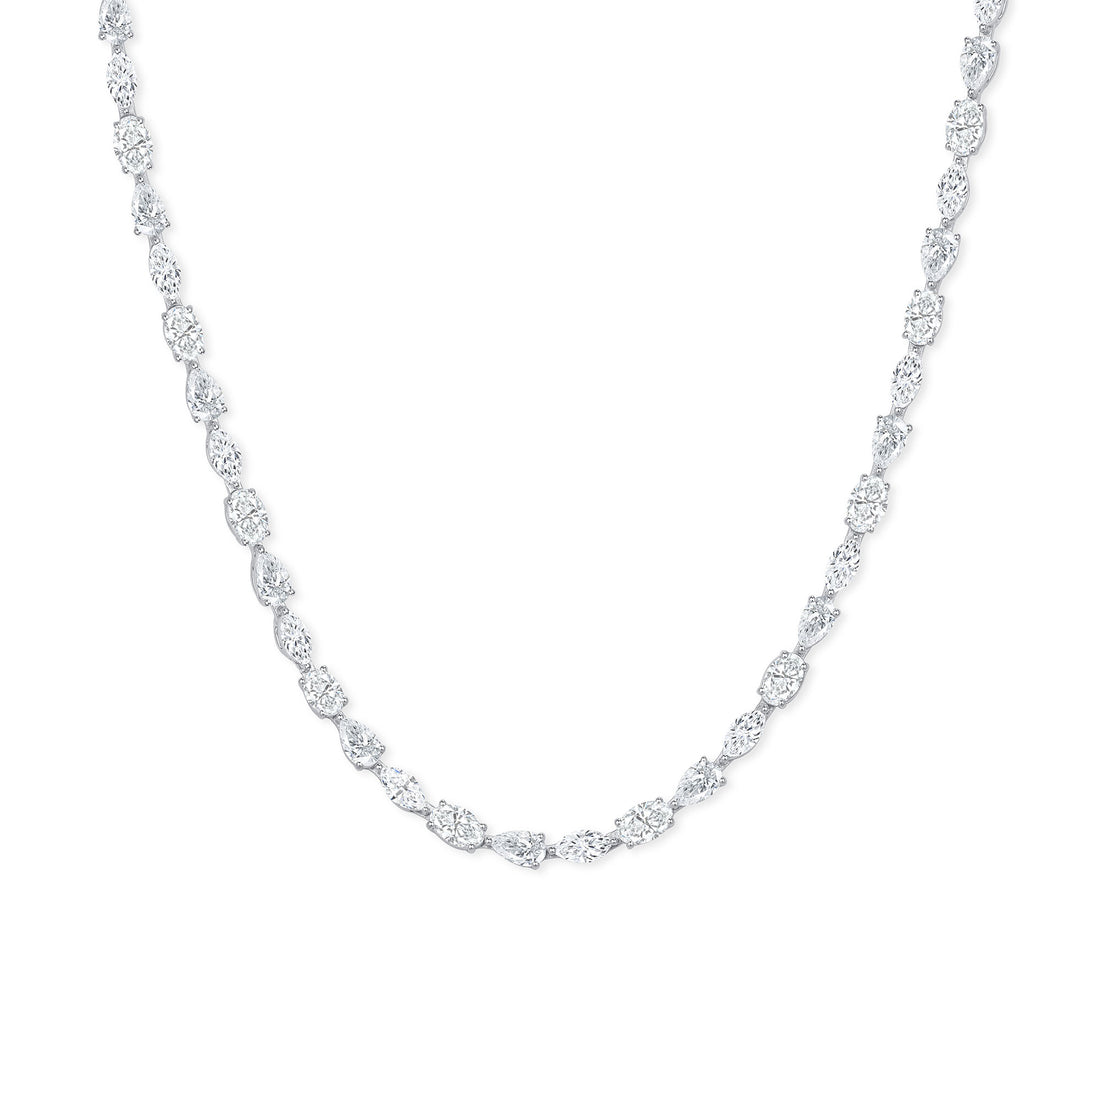 15.73 CT Mixed-cut Diamond Tennis Necklace